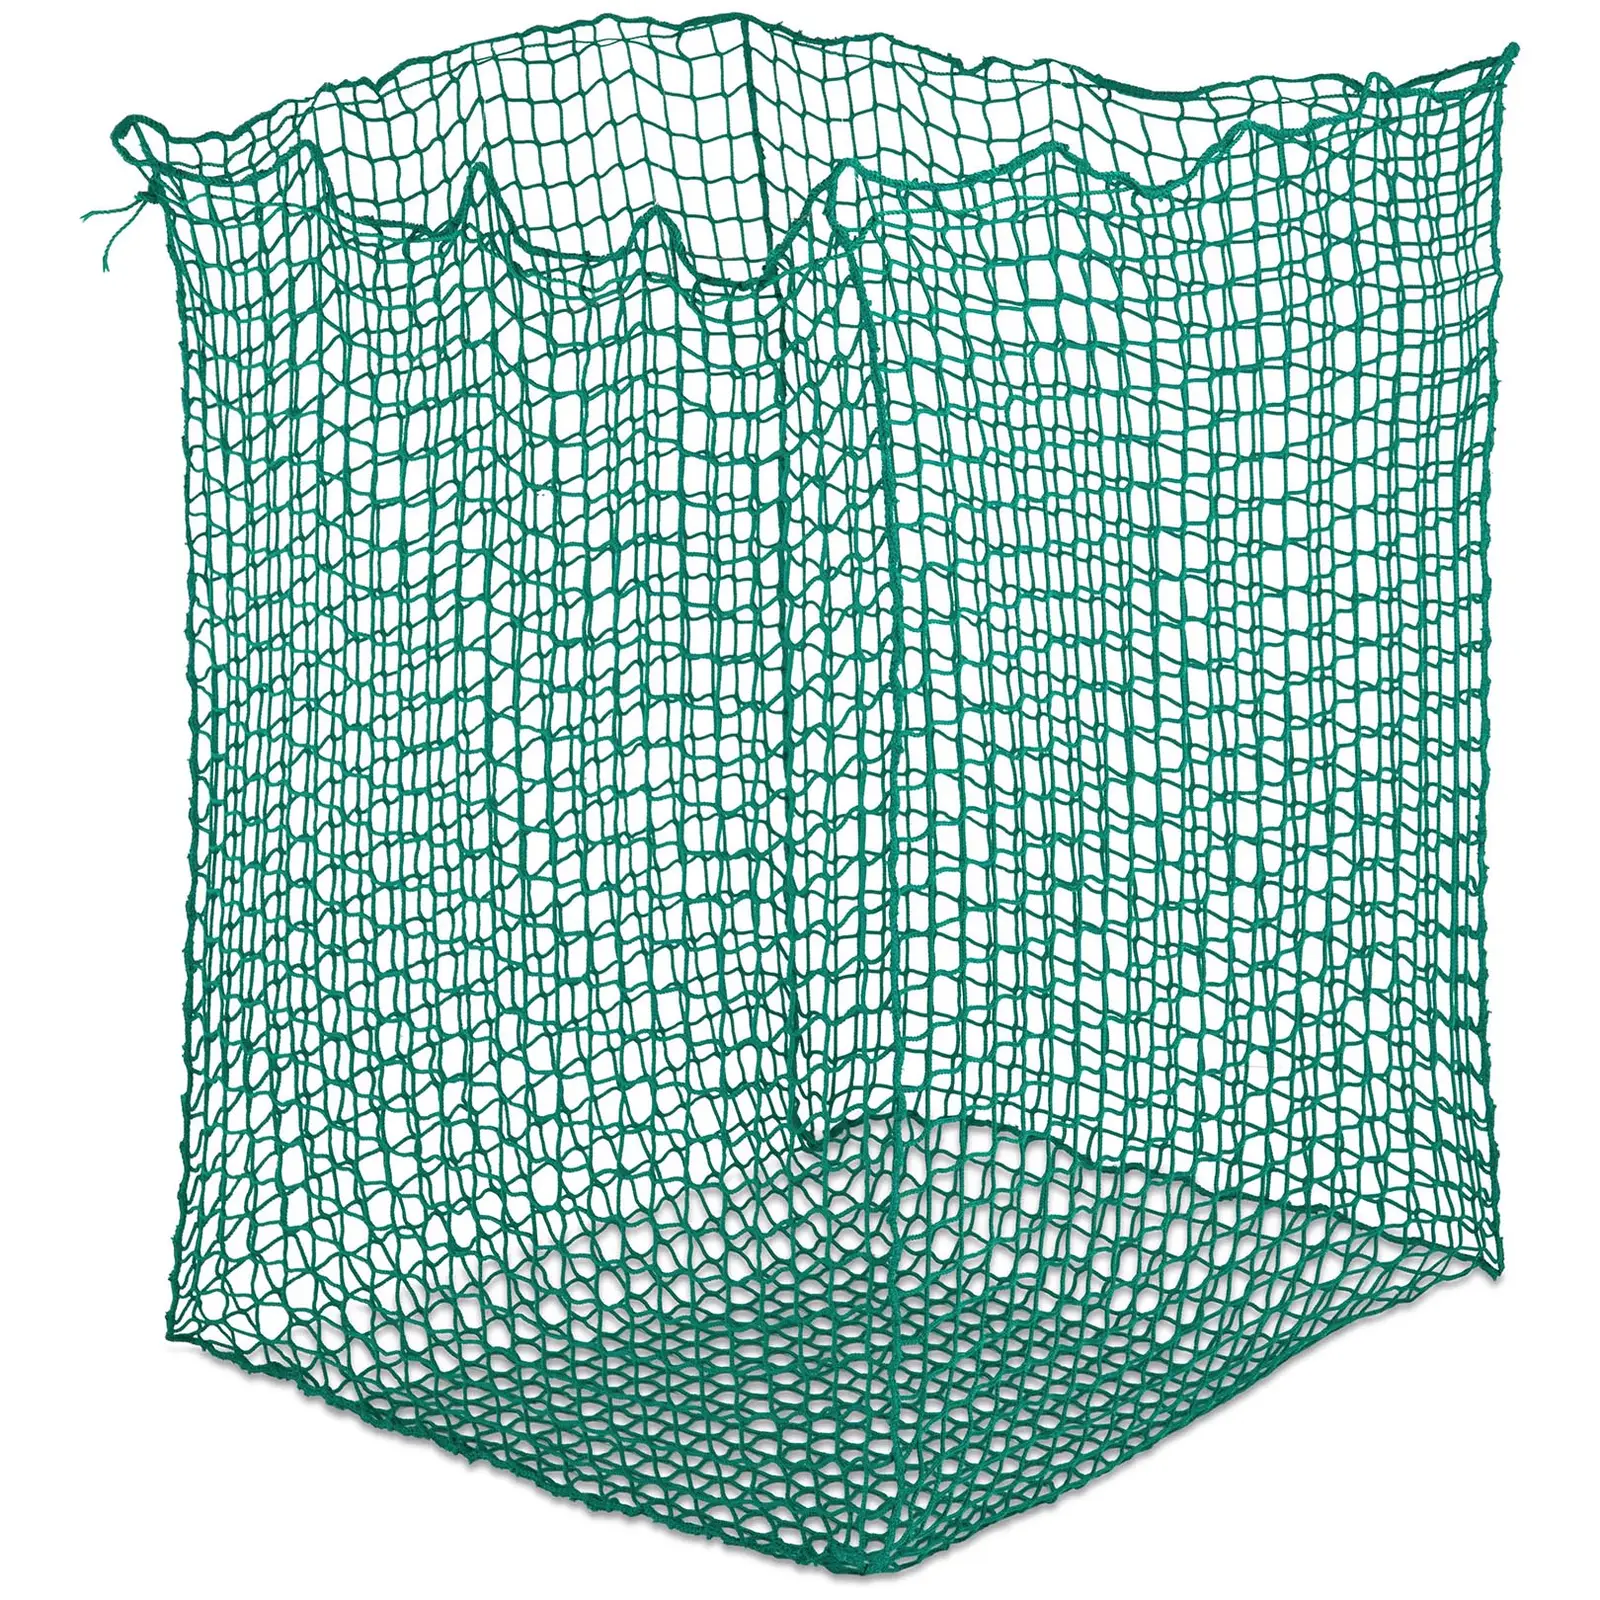 Кръгла мрежа за бали сено - 1 400 x 1 400 x 1 600 мм - размер на примката: 45 x 45 мм - зелена